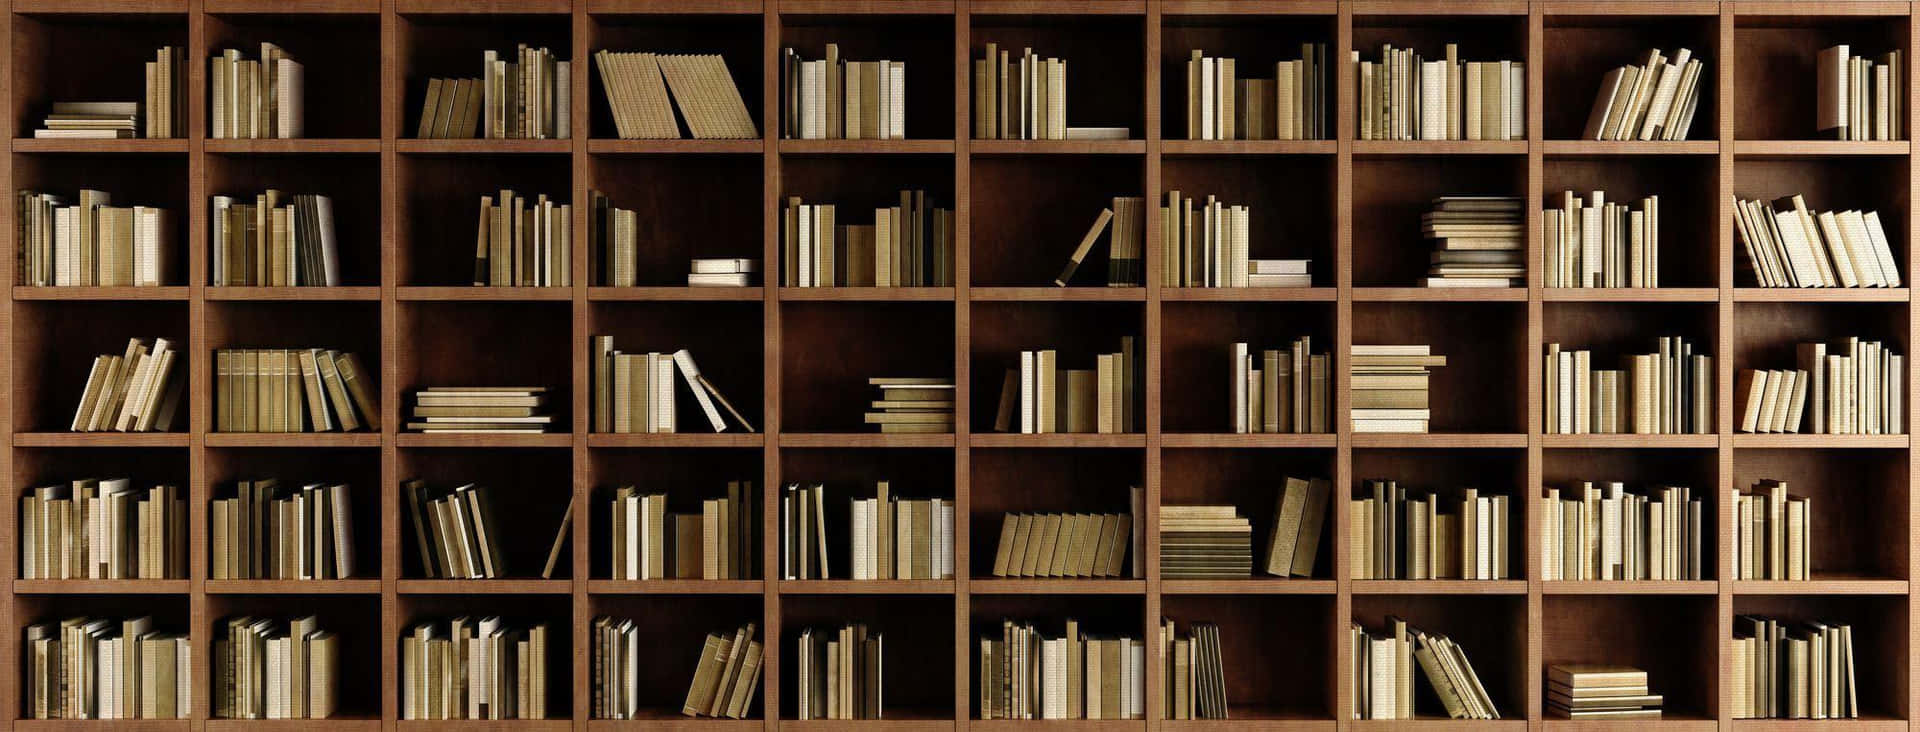 Bookshelf Ultrawide Picture